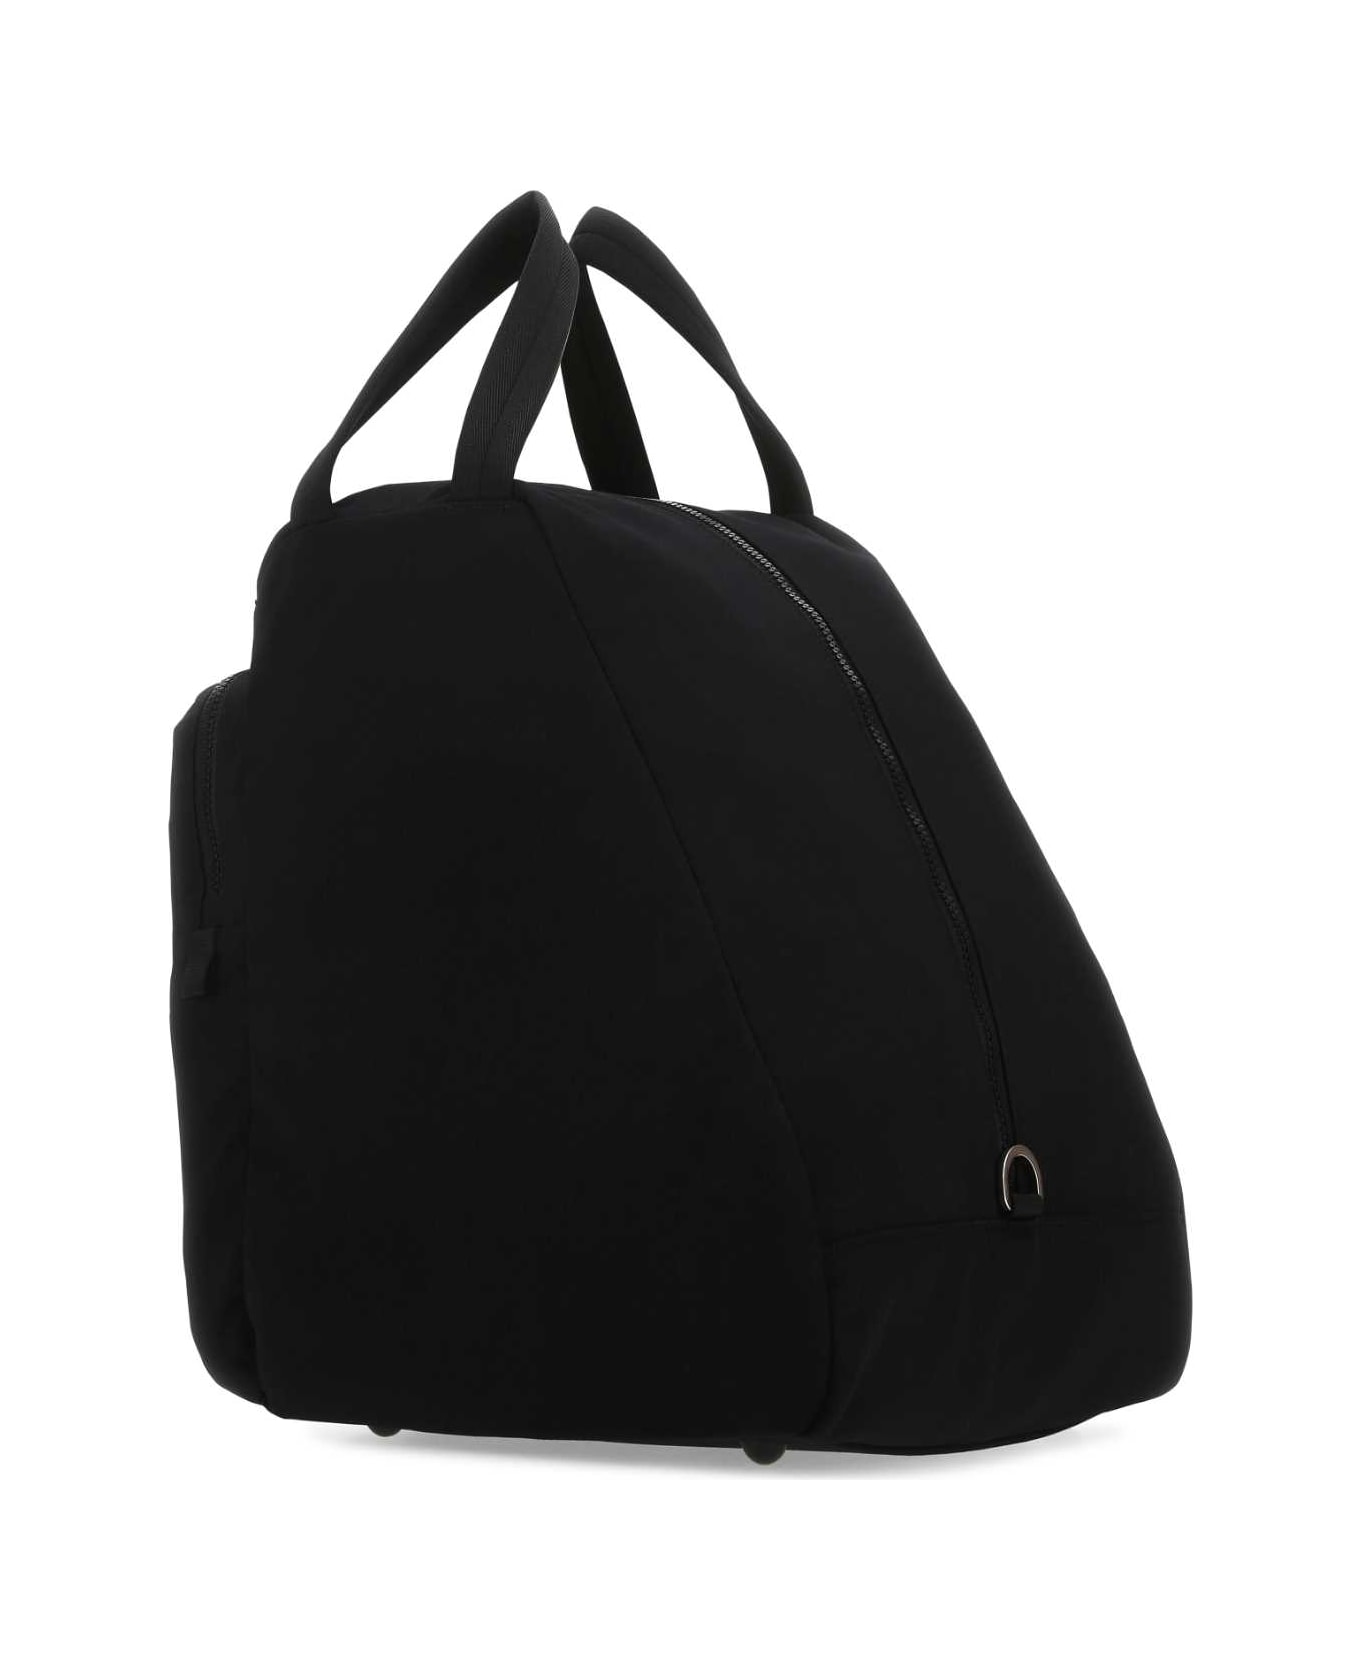 Prada Black Canvas Travel Bag - NERO